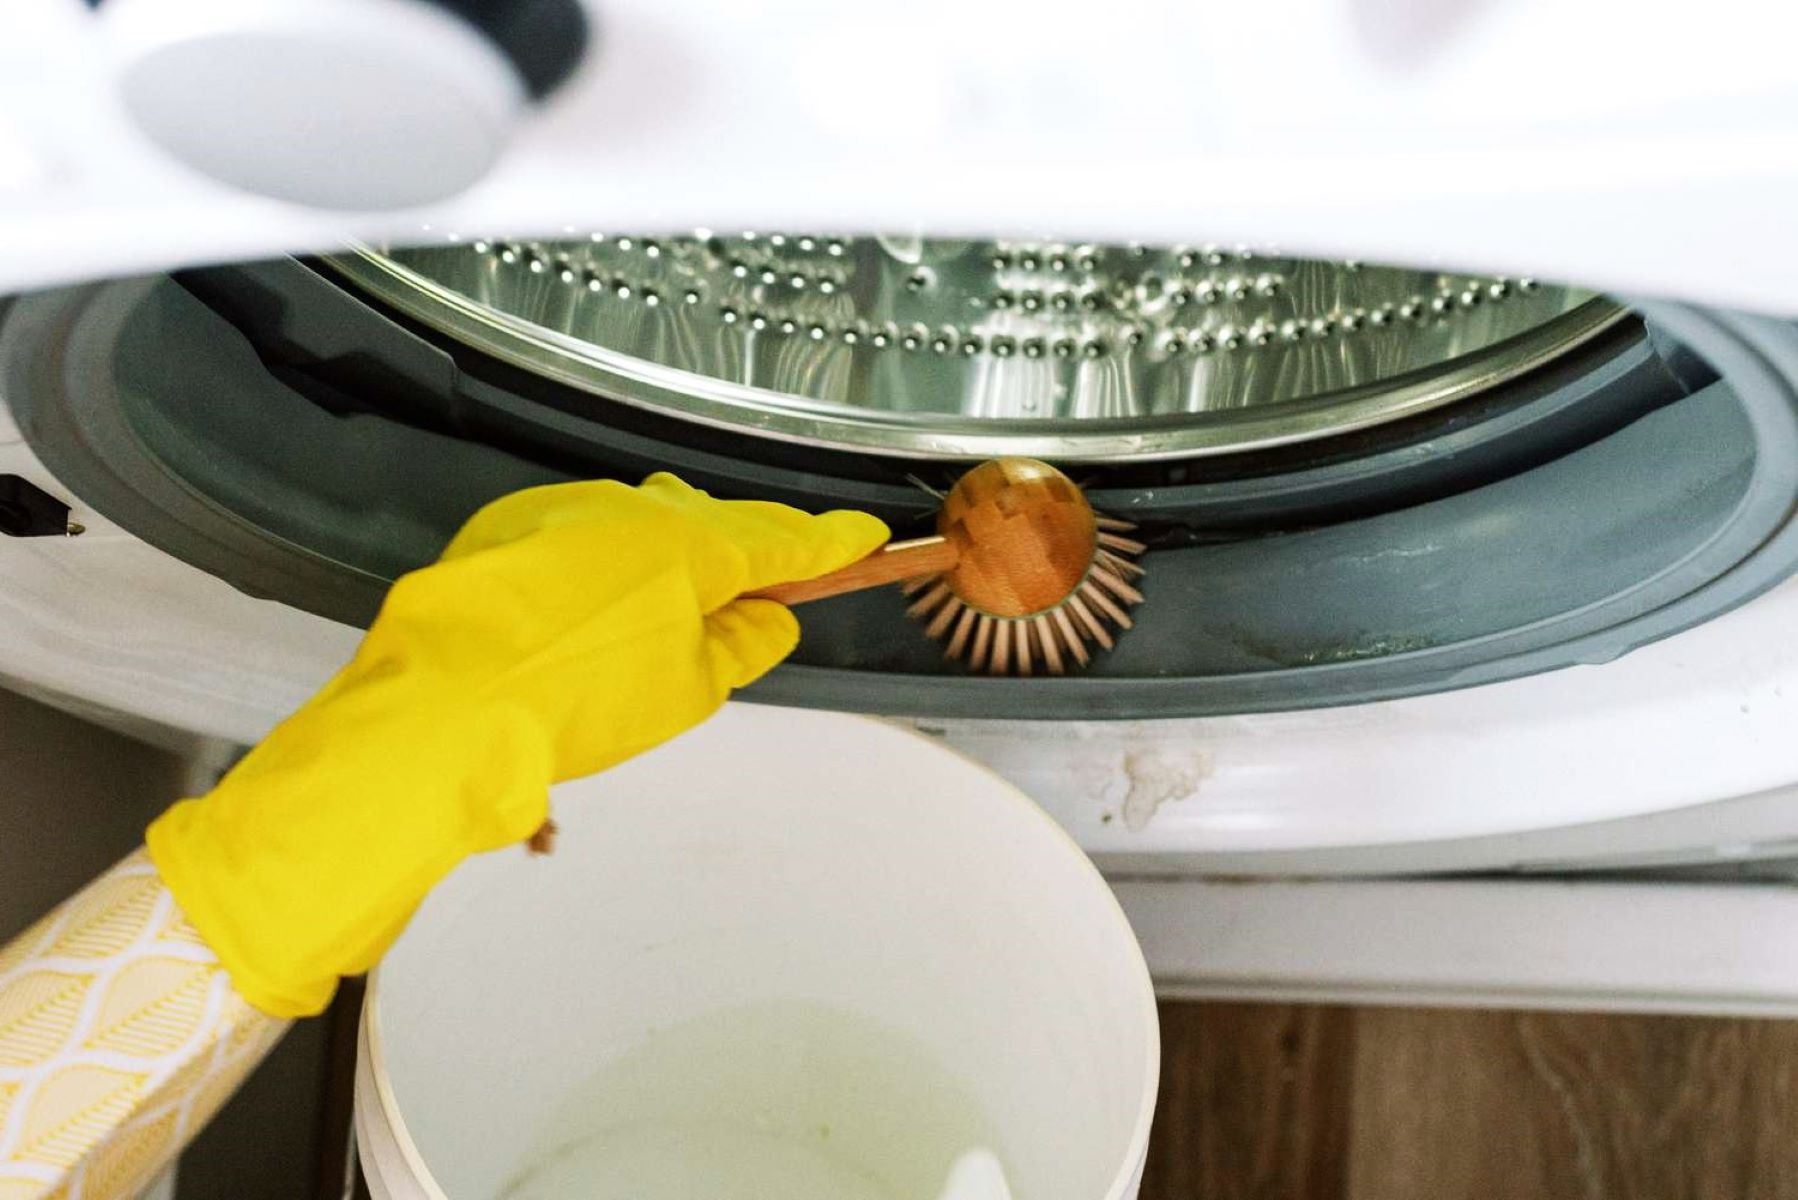 How To Sanitize A Public Washing Machine